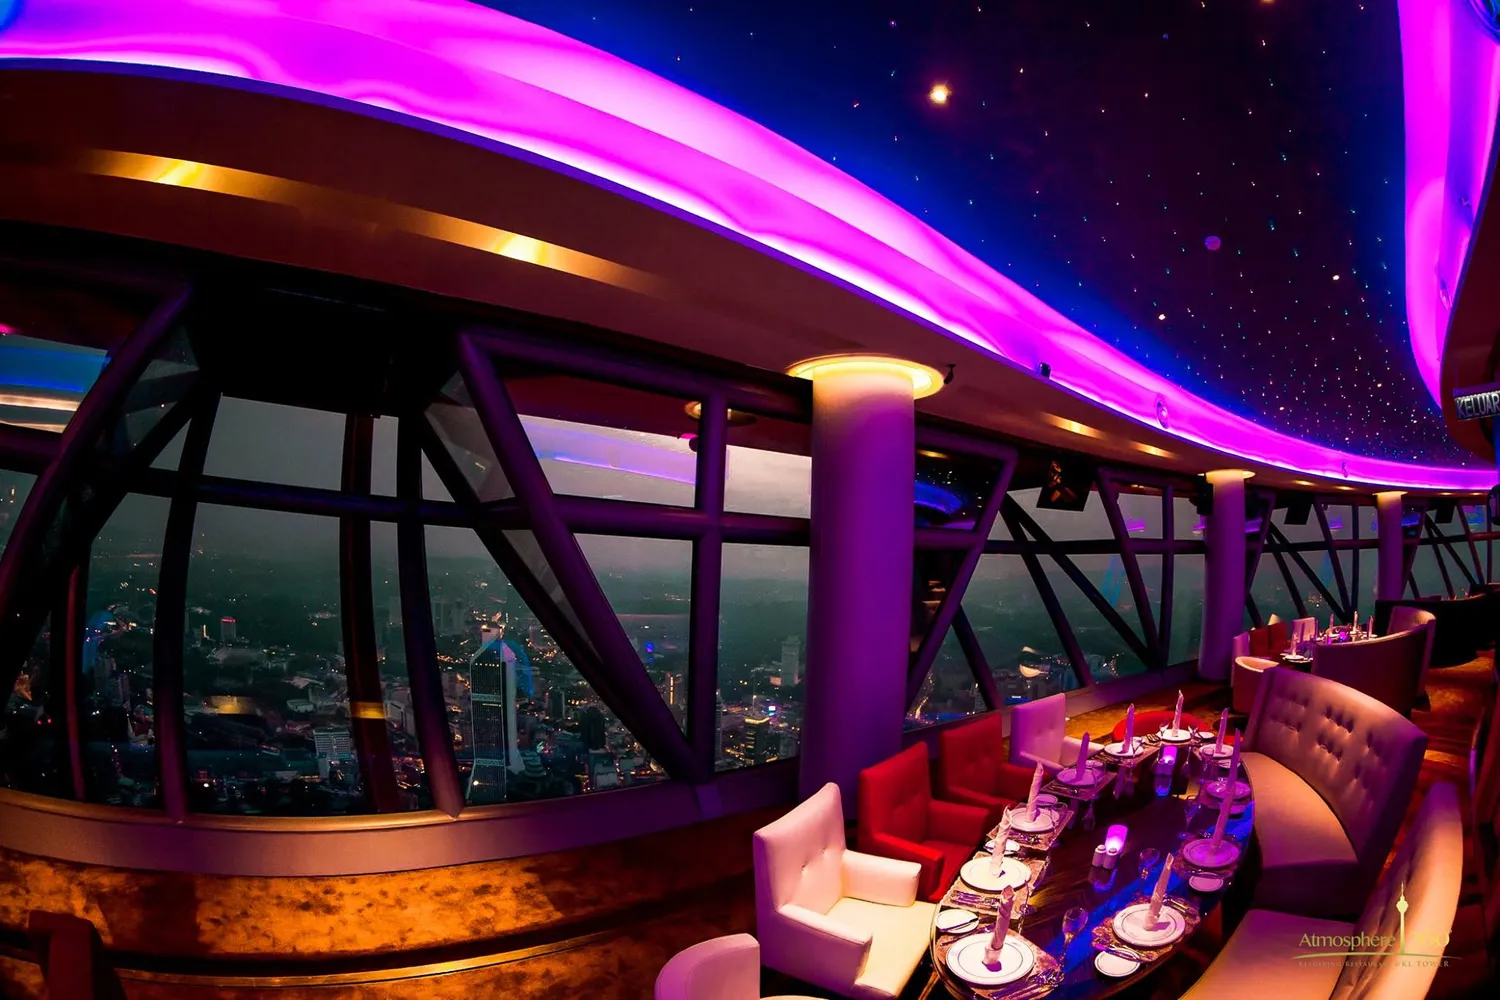 Atmosphere 360 restaurant Malaysia